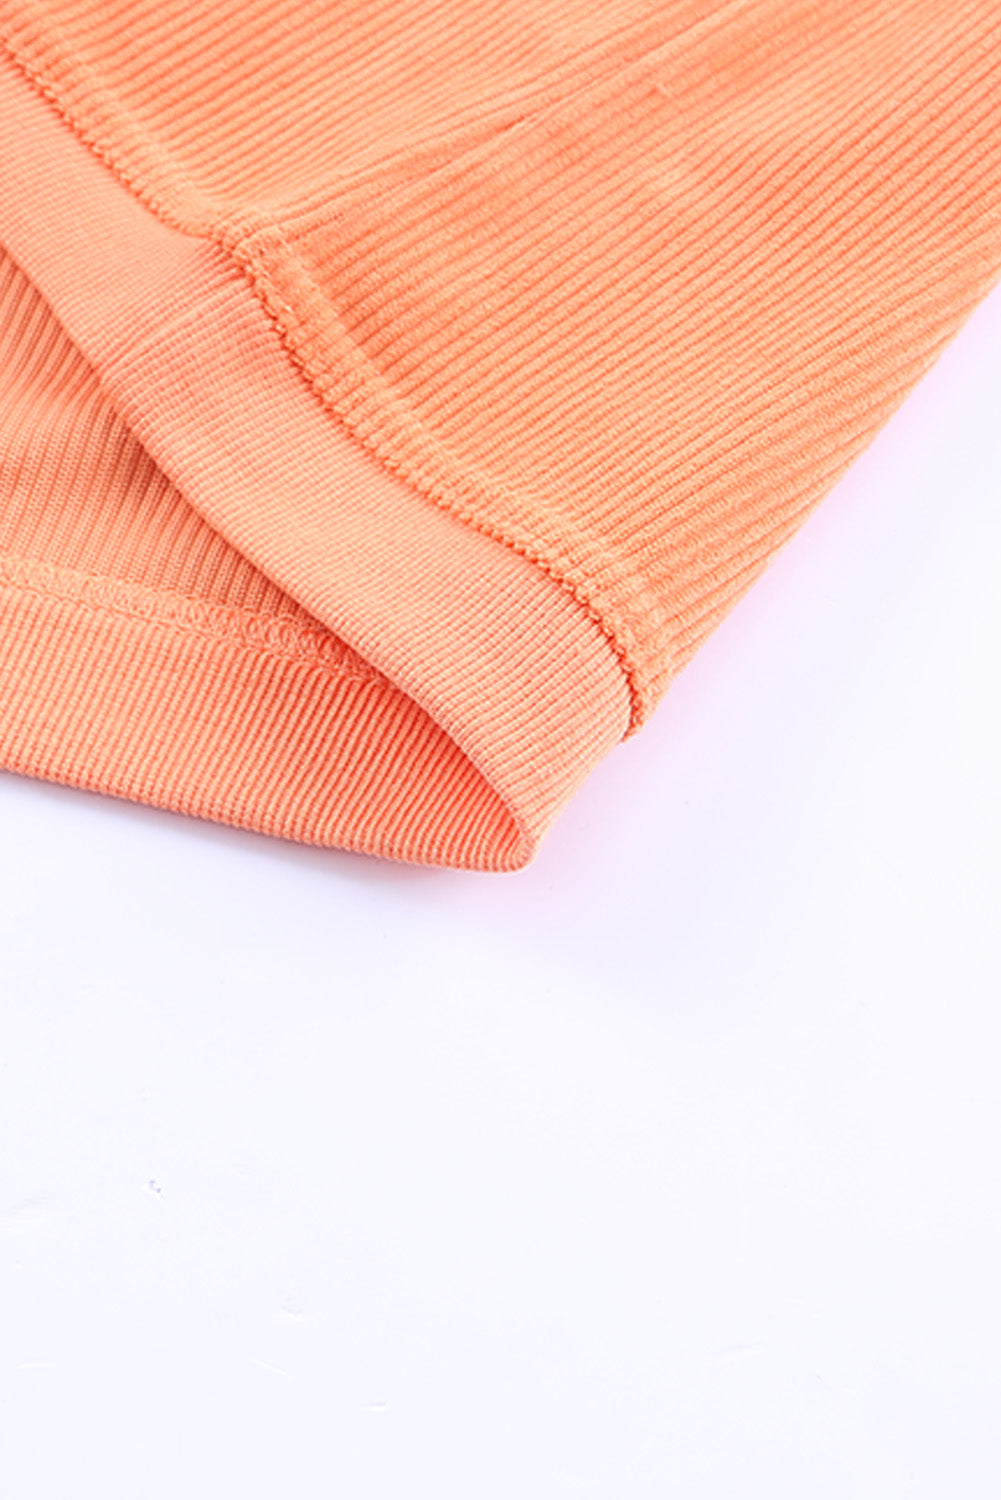 Orange Corded SPICY GIRL Graphic Sweatshirt